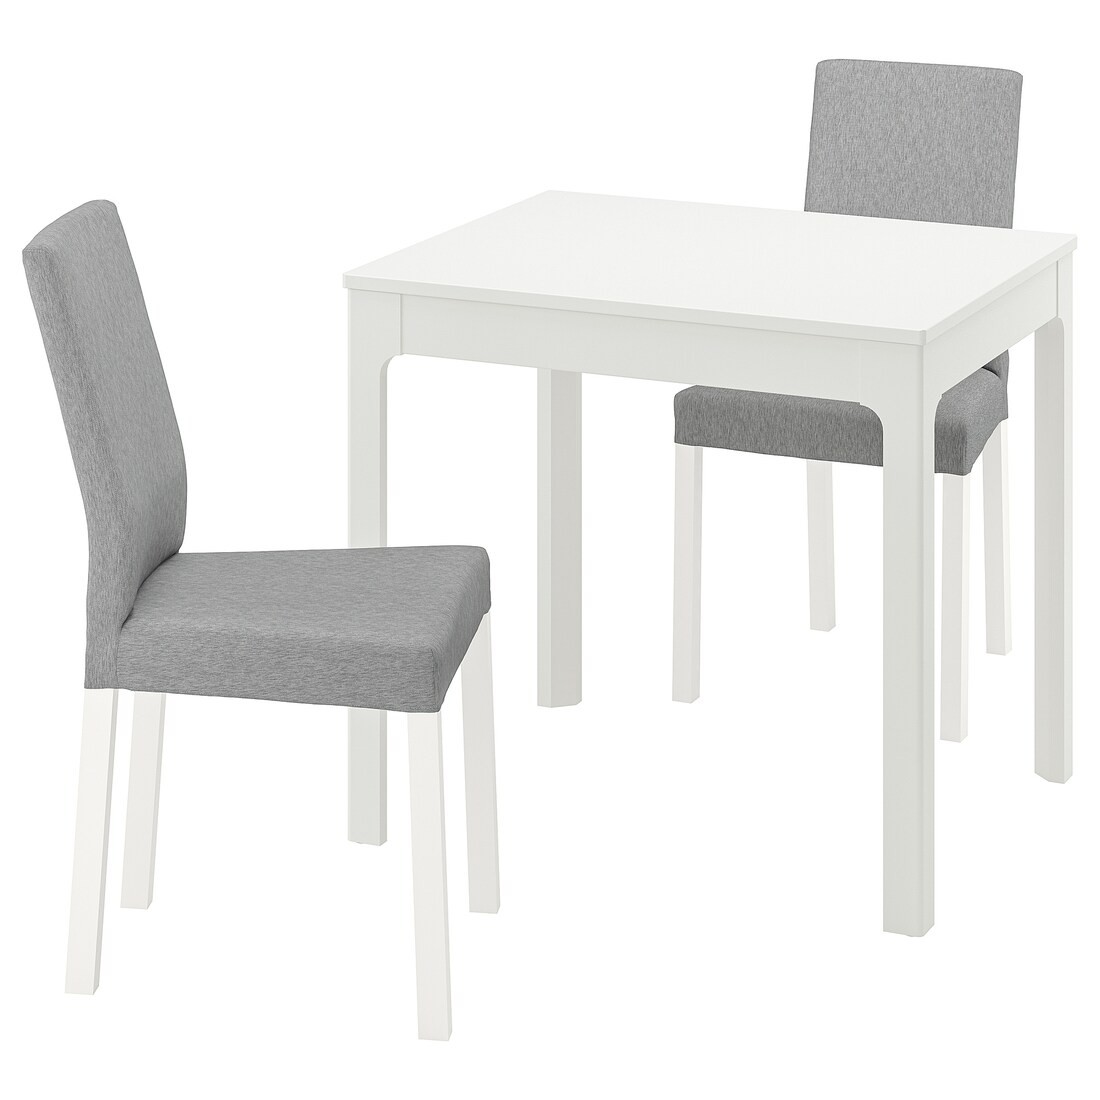 IKEA EKEDALEN ЭКЕДАЛЕН / KÄTTIL КЭТТИЛ Стол и 2 стула, белый / Knisa светло-серый, 80/120 см 59428811 594.288.11